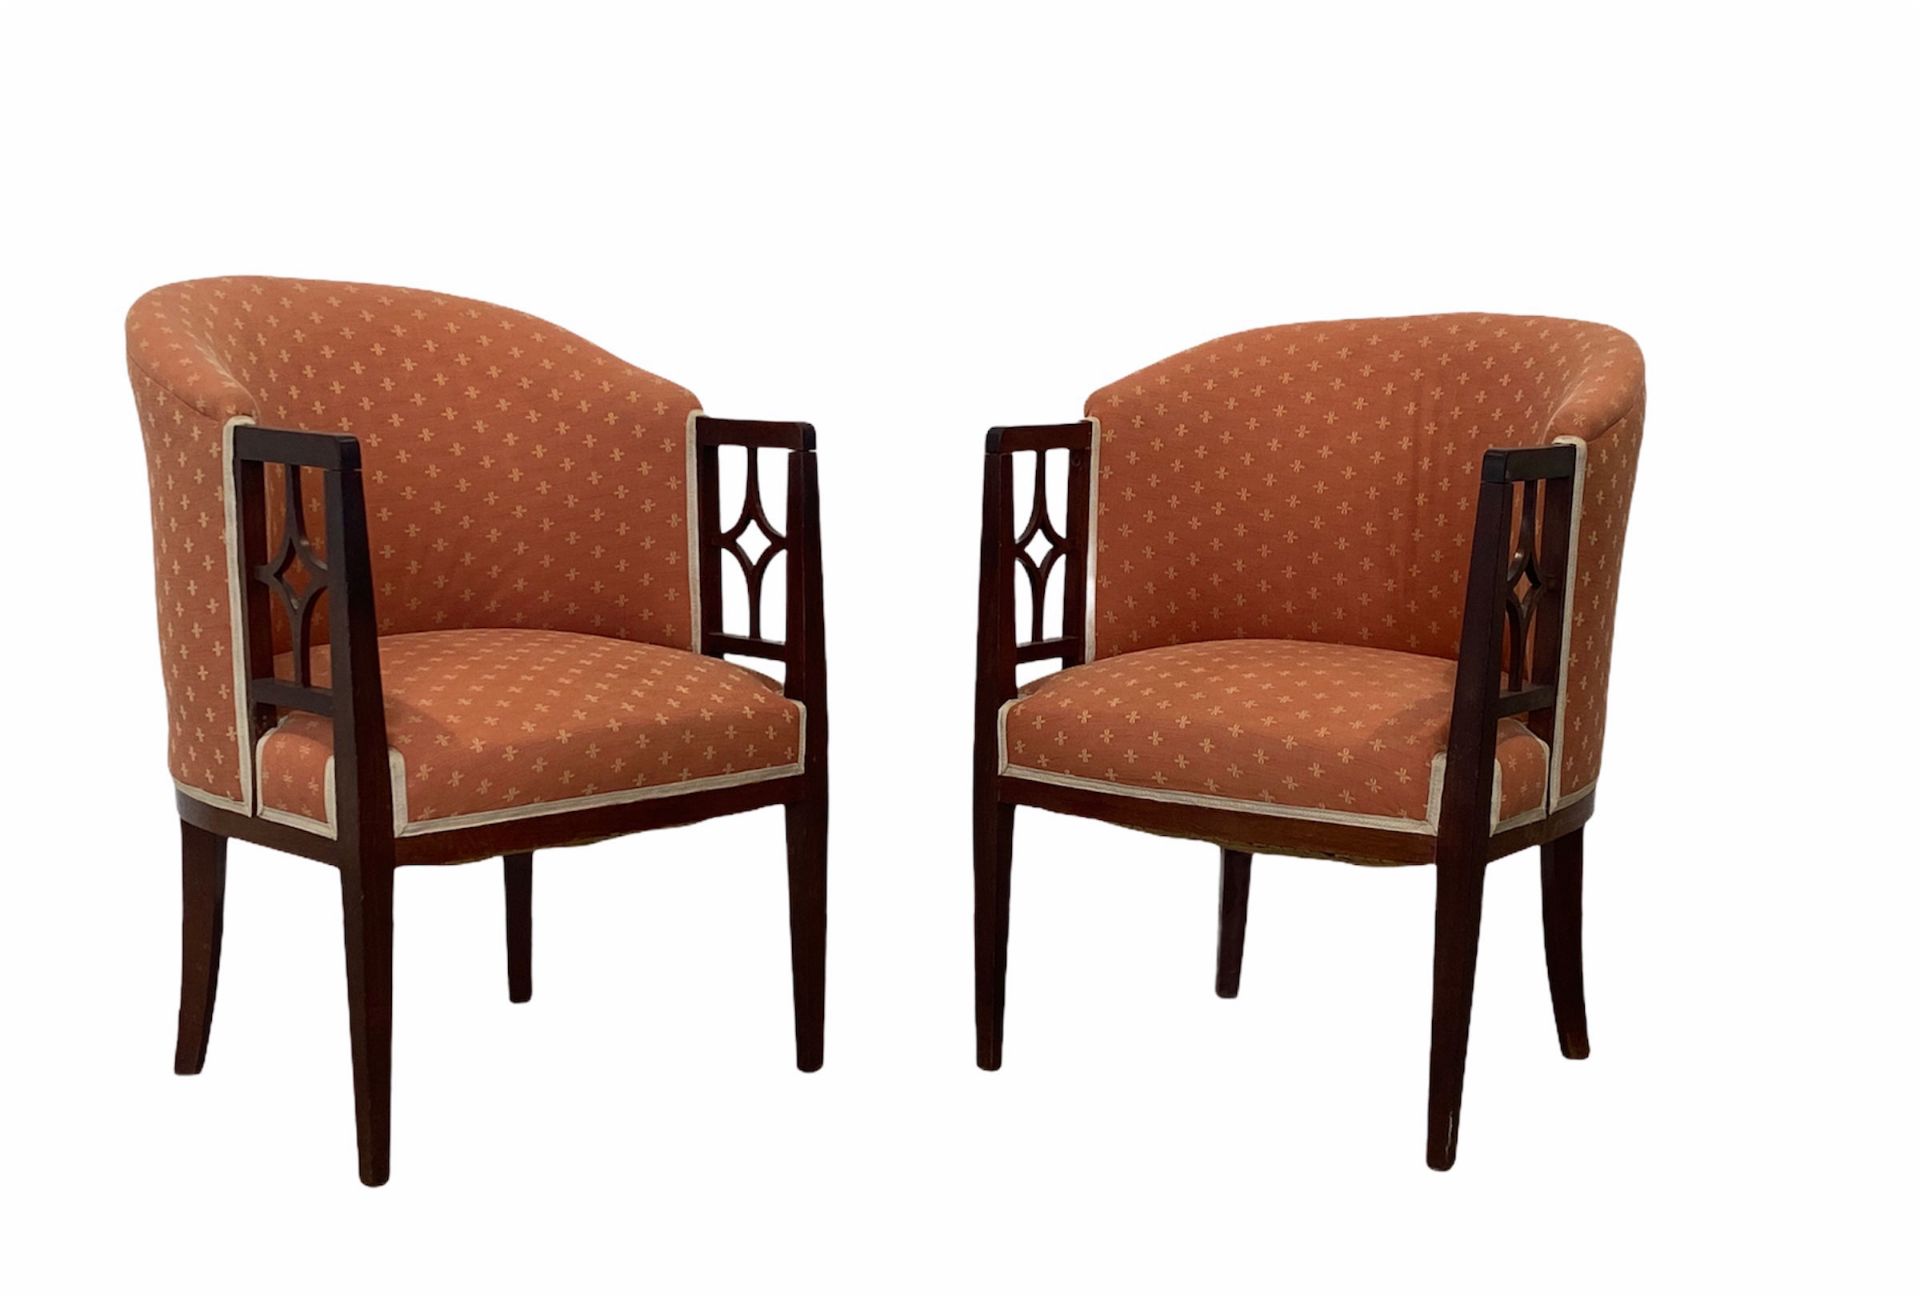 Leon SNEYERS (1877-1949) pair of armchairs